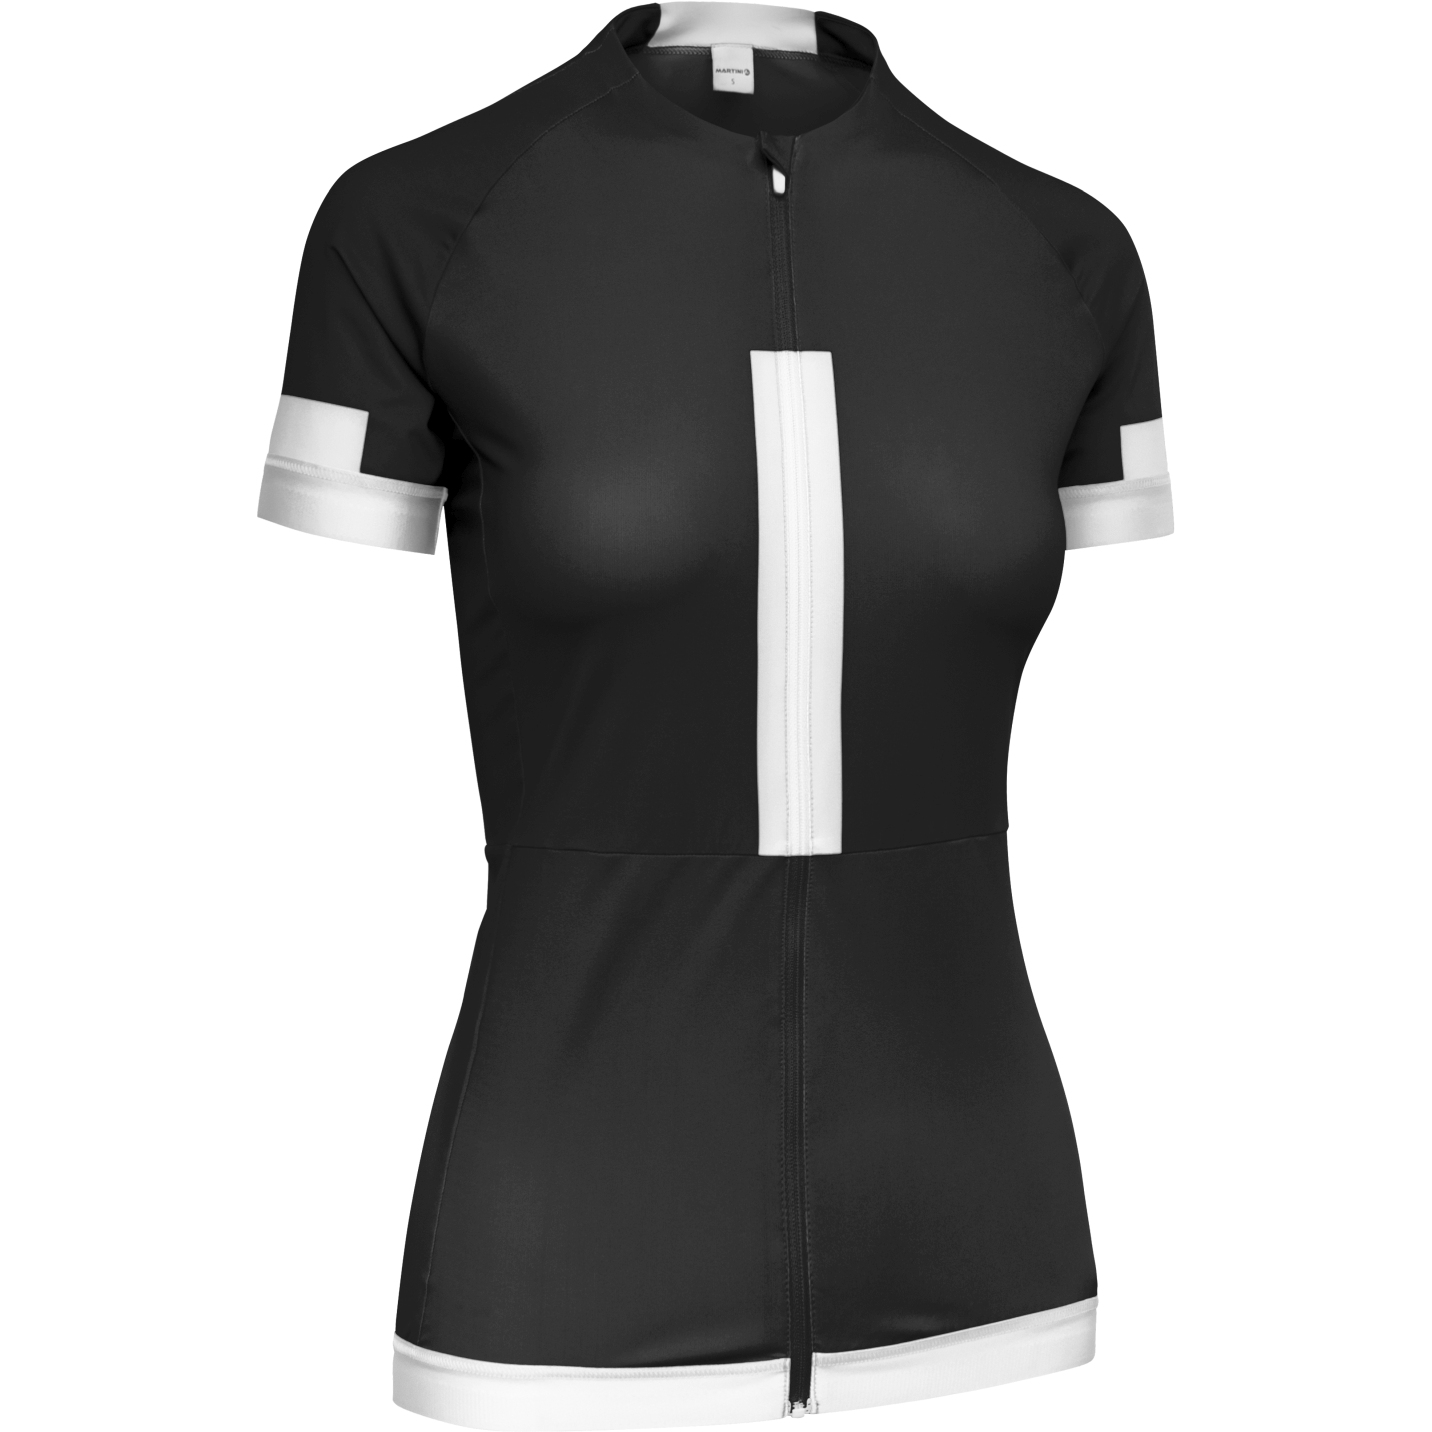 Image of Martini Sportswear Kiga Women's Jersey - black/white